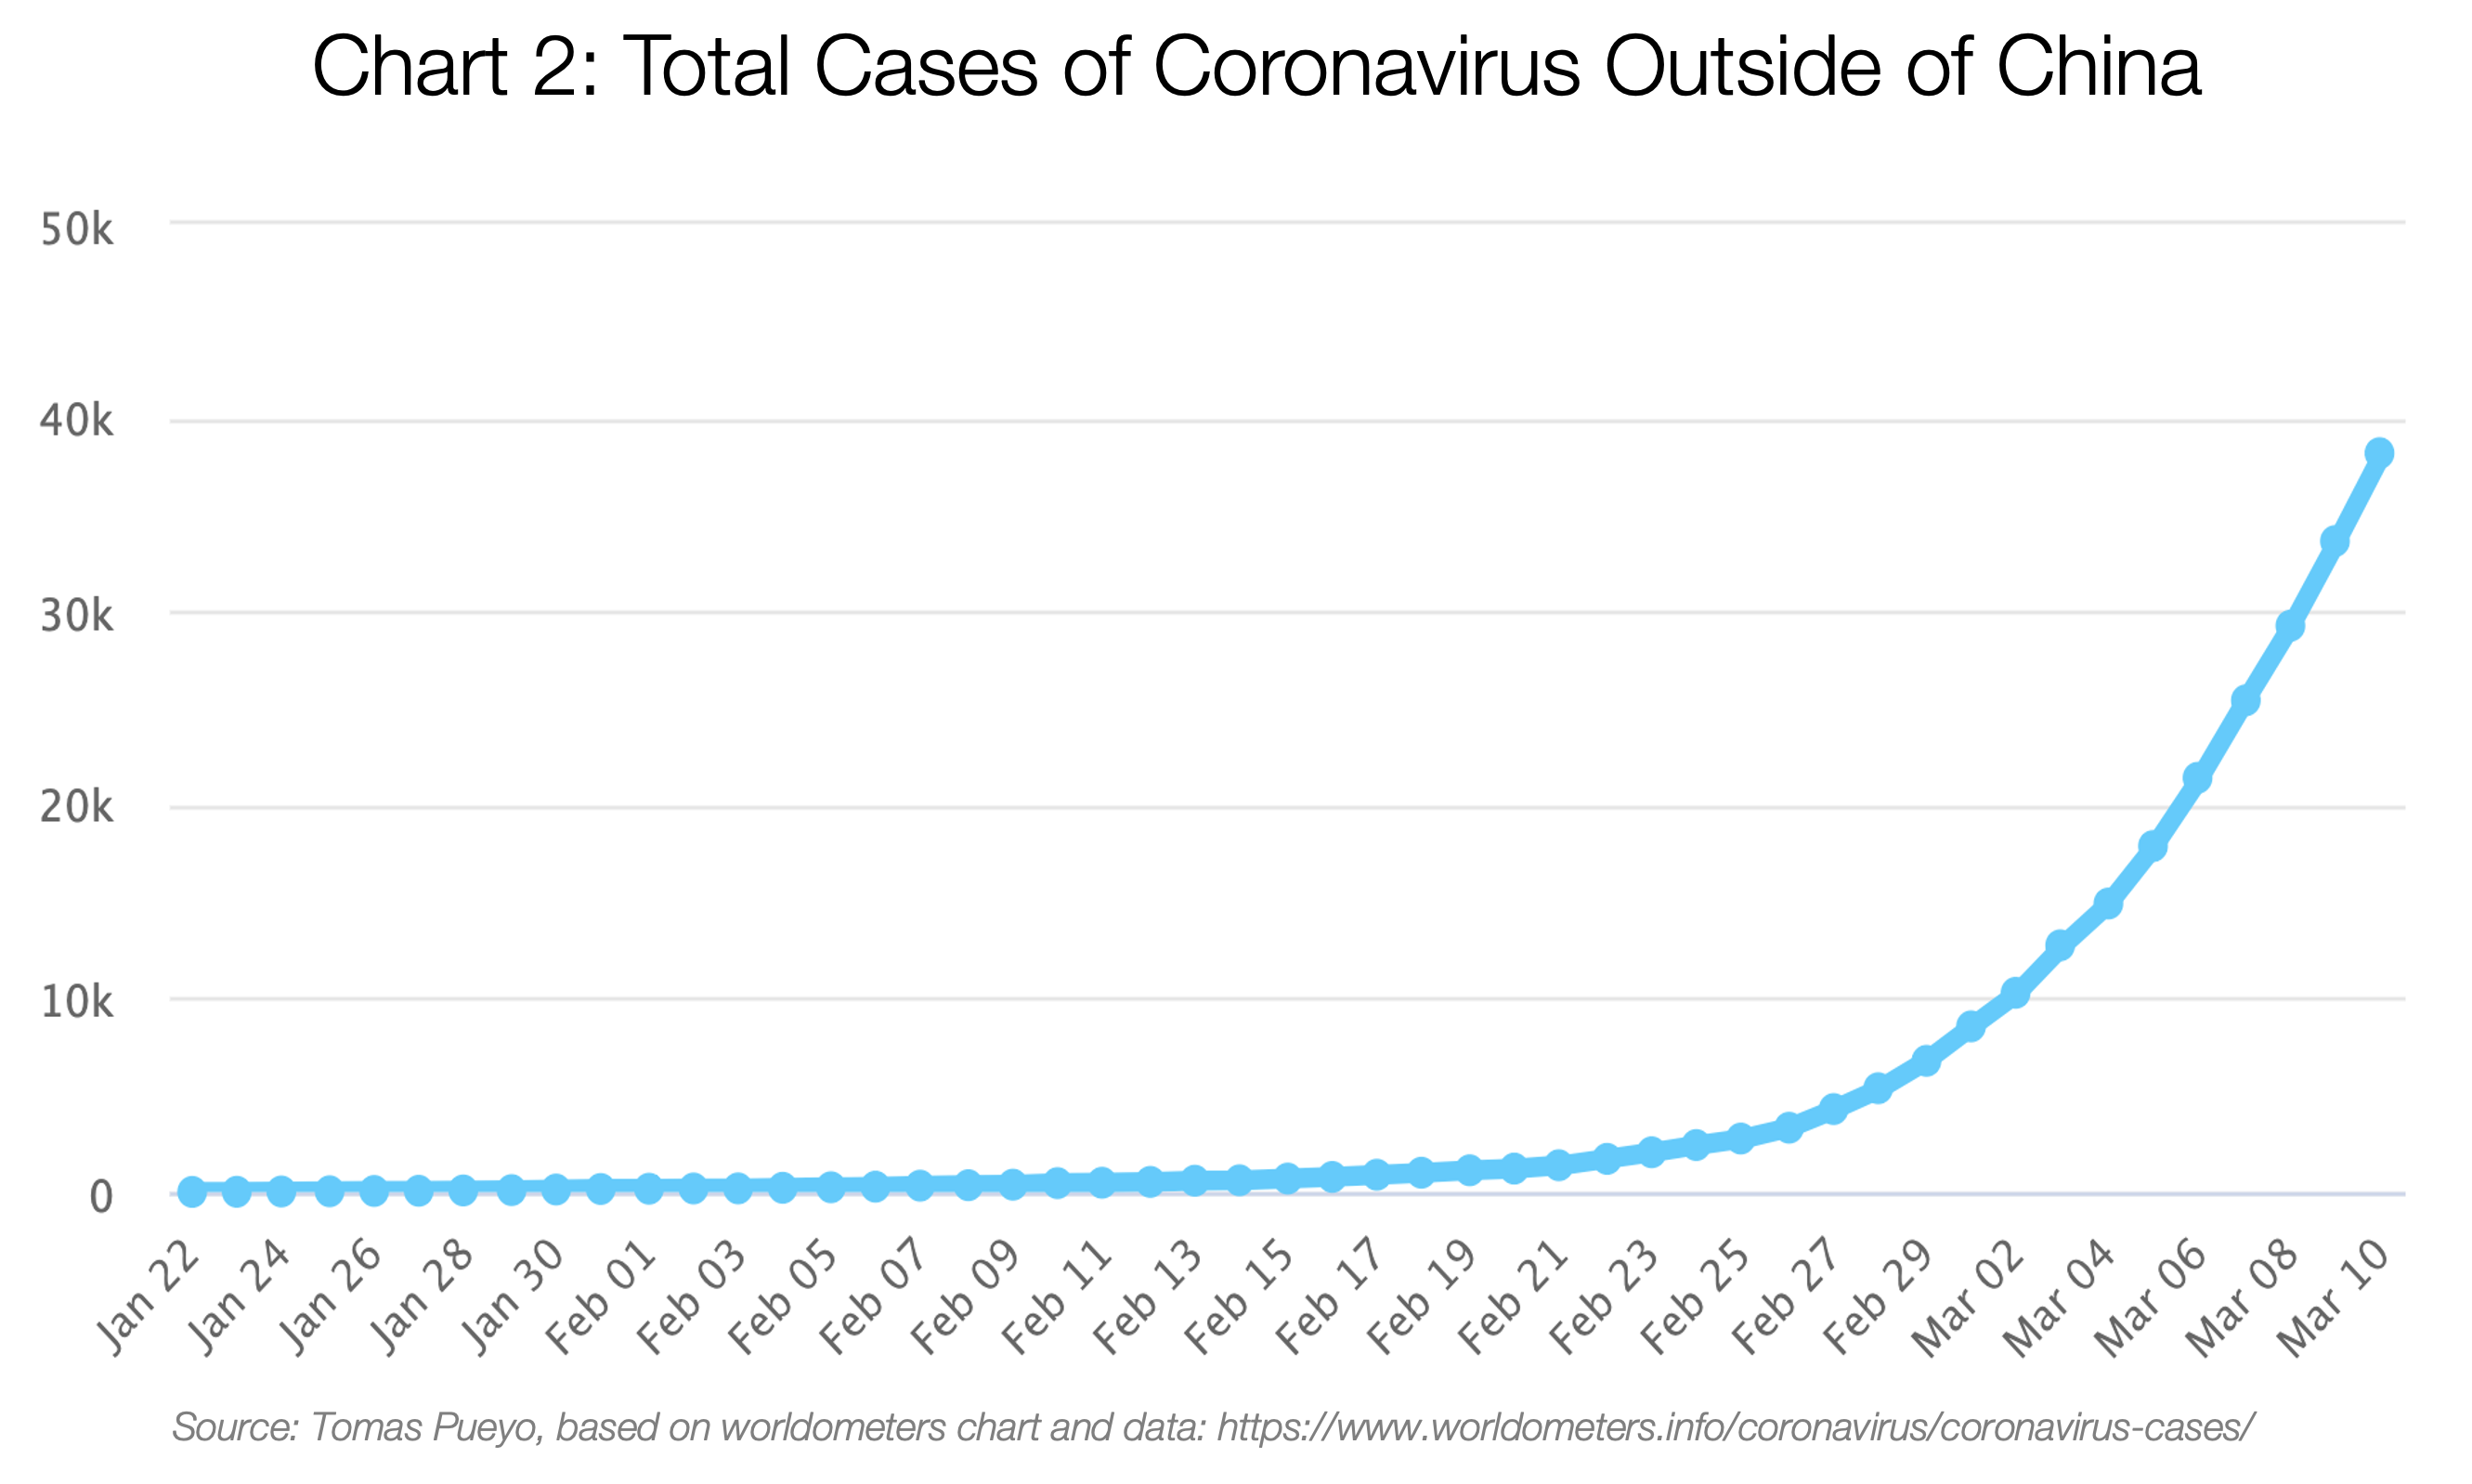 chart 2: 중국을 제외한 나라의 전체 코로나바이러스 발생 건수